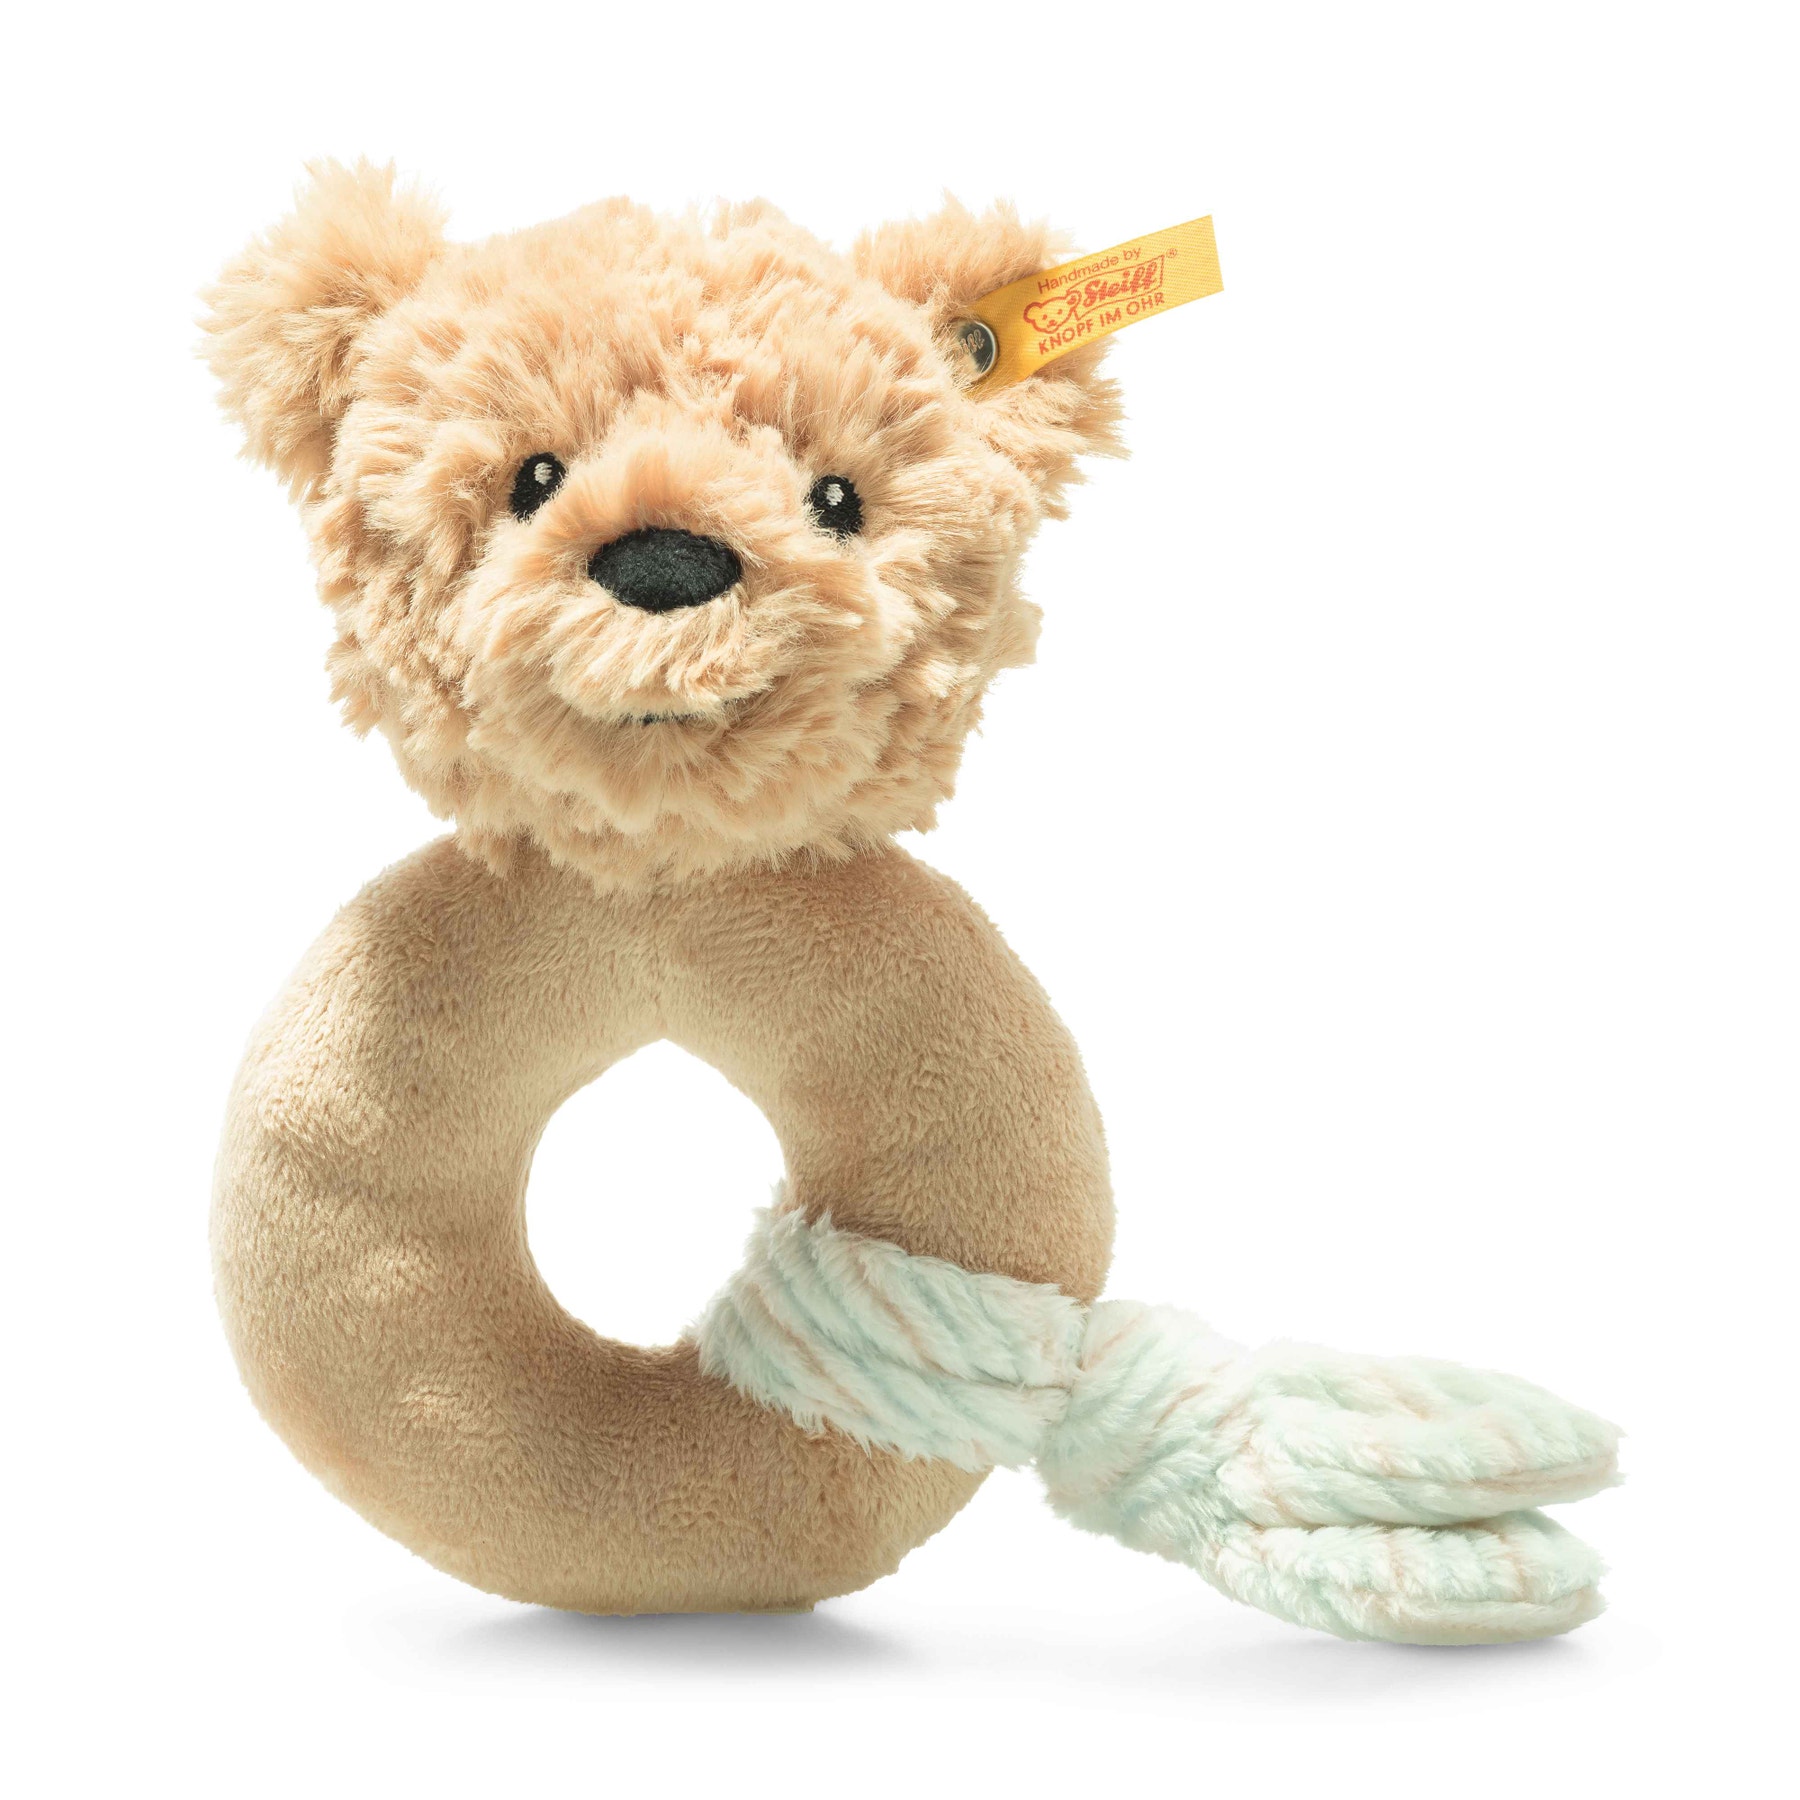 Soft Cuddly Friends Jimmy Teddy bear grip toy with rattle